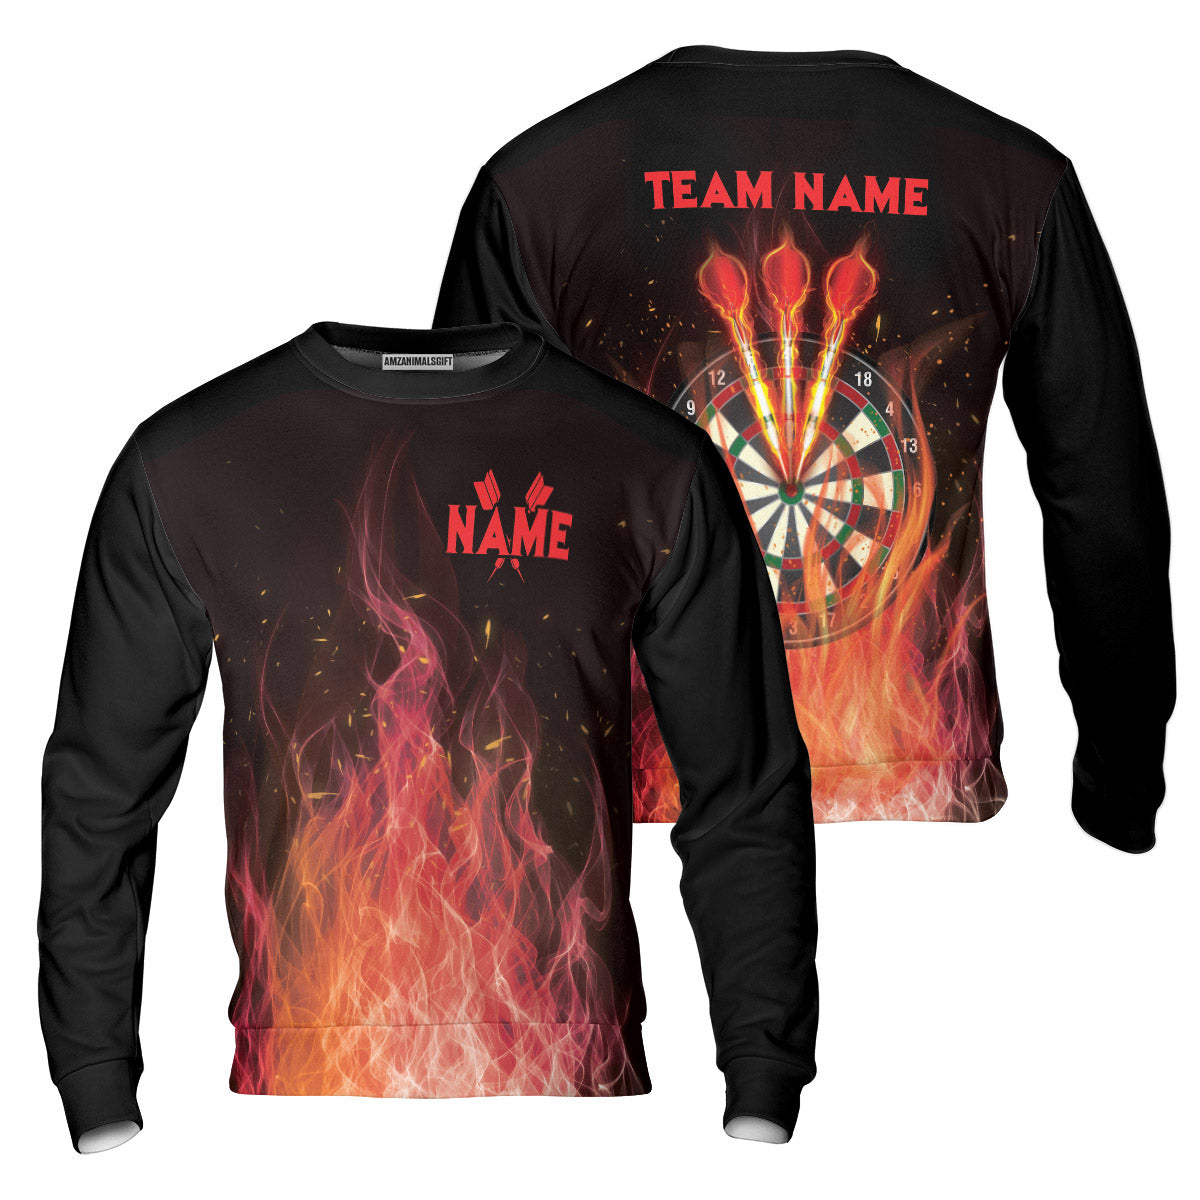 Darts Sweatshirt Custom Name And Team Name, Darts Flame Player Uniform, Personalized Shirt For Darts Lovers, Darts Players